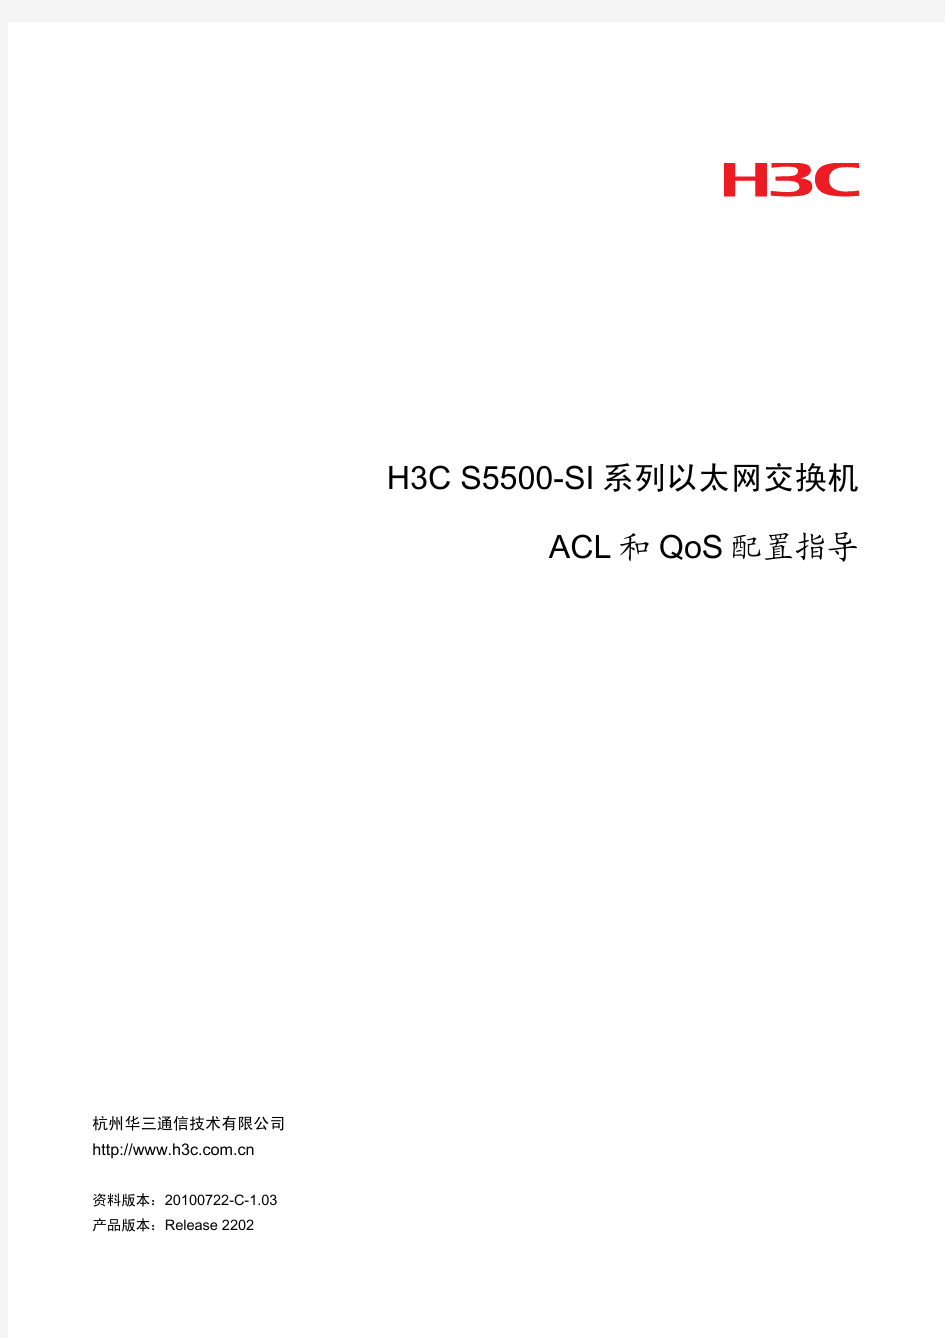 ACL和QoS配置指导-整本手册